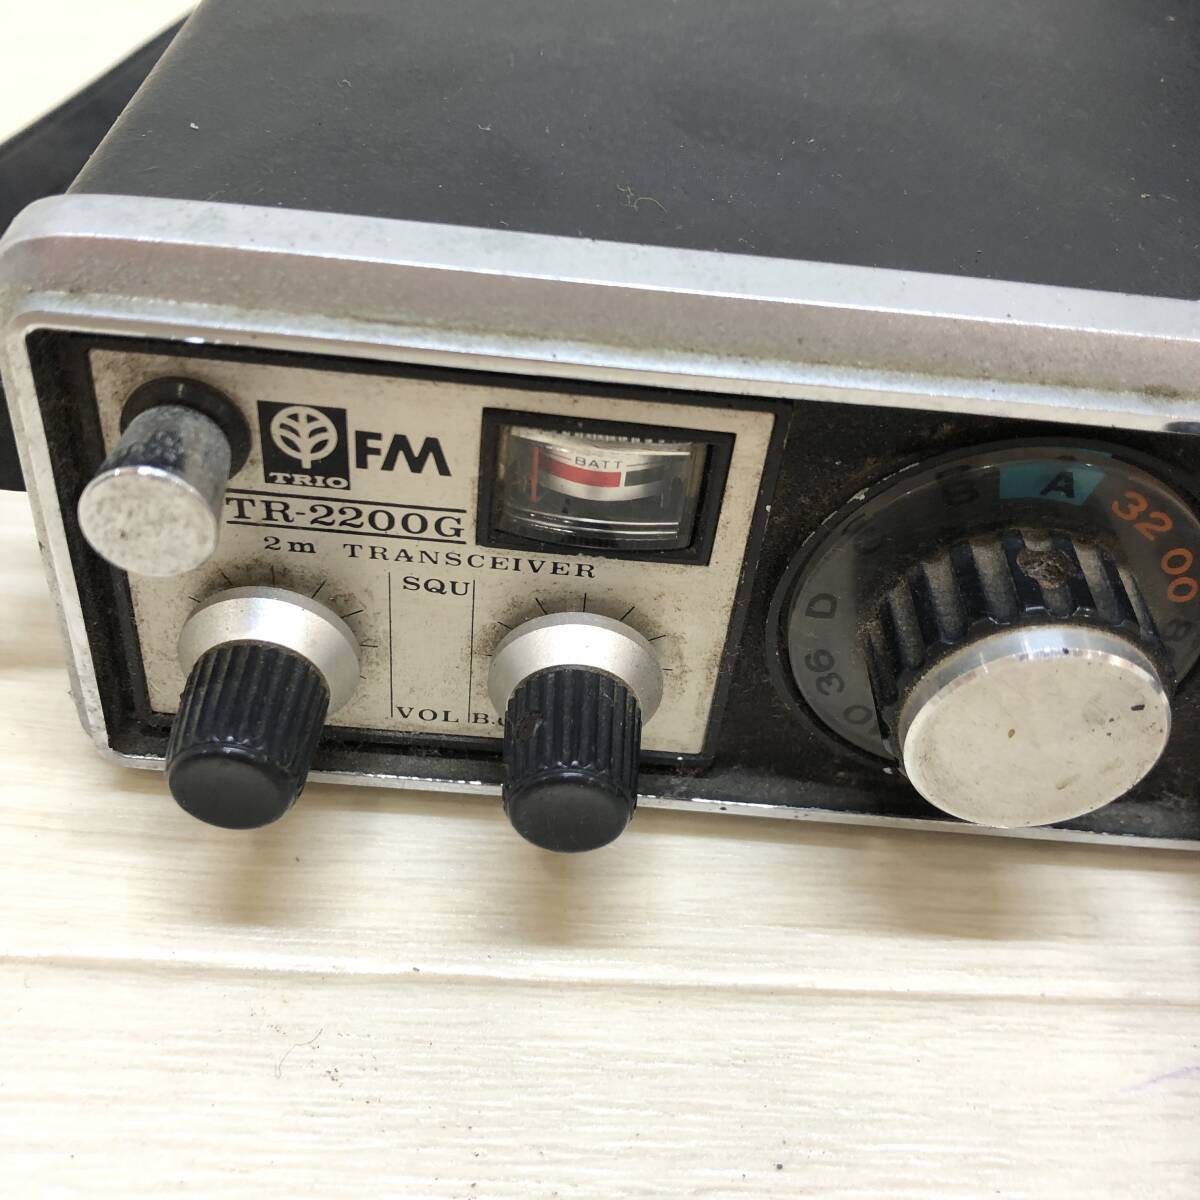 ^ TRIO Trio 2M FM transceiver TR-2200G transceiver amateur radio hobby repair operation not yet verification junk ^C72862